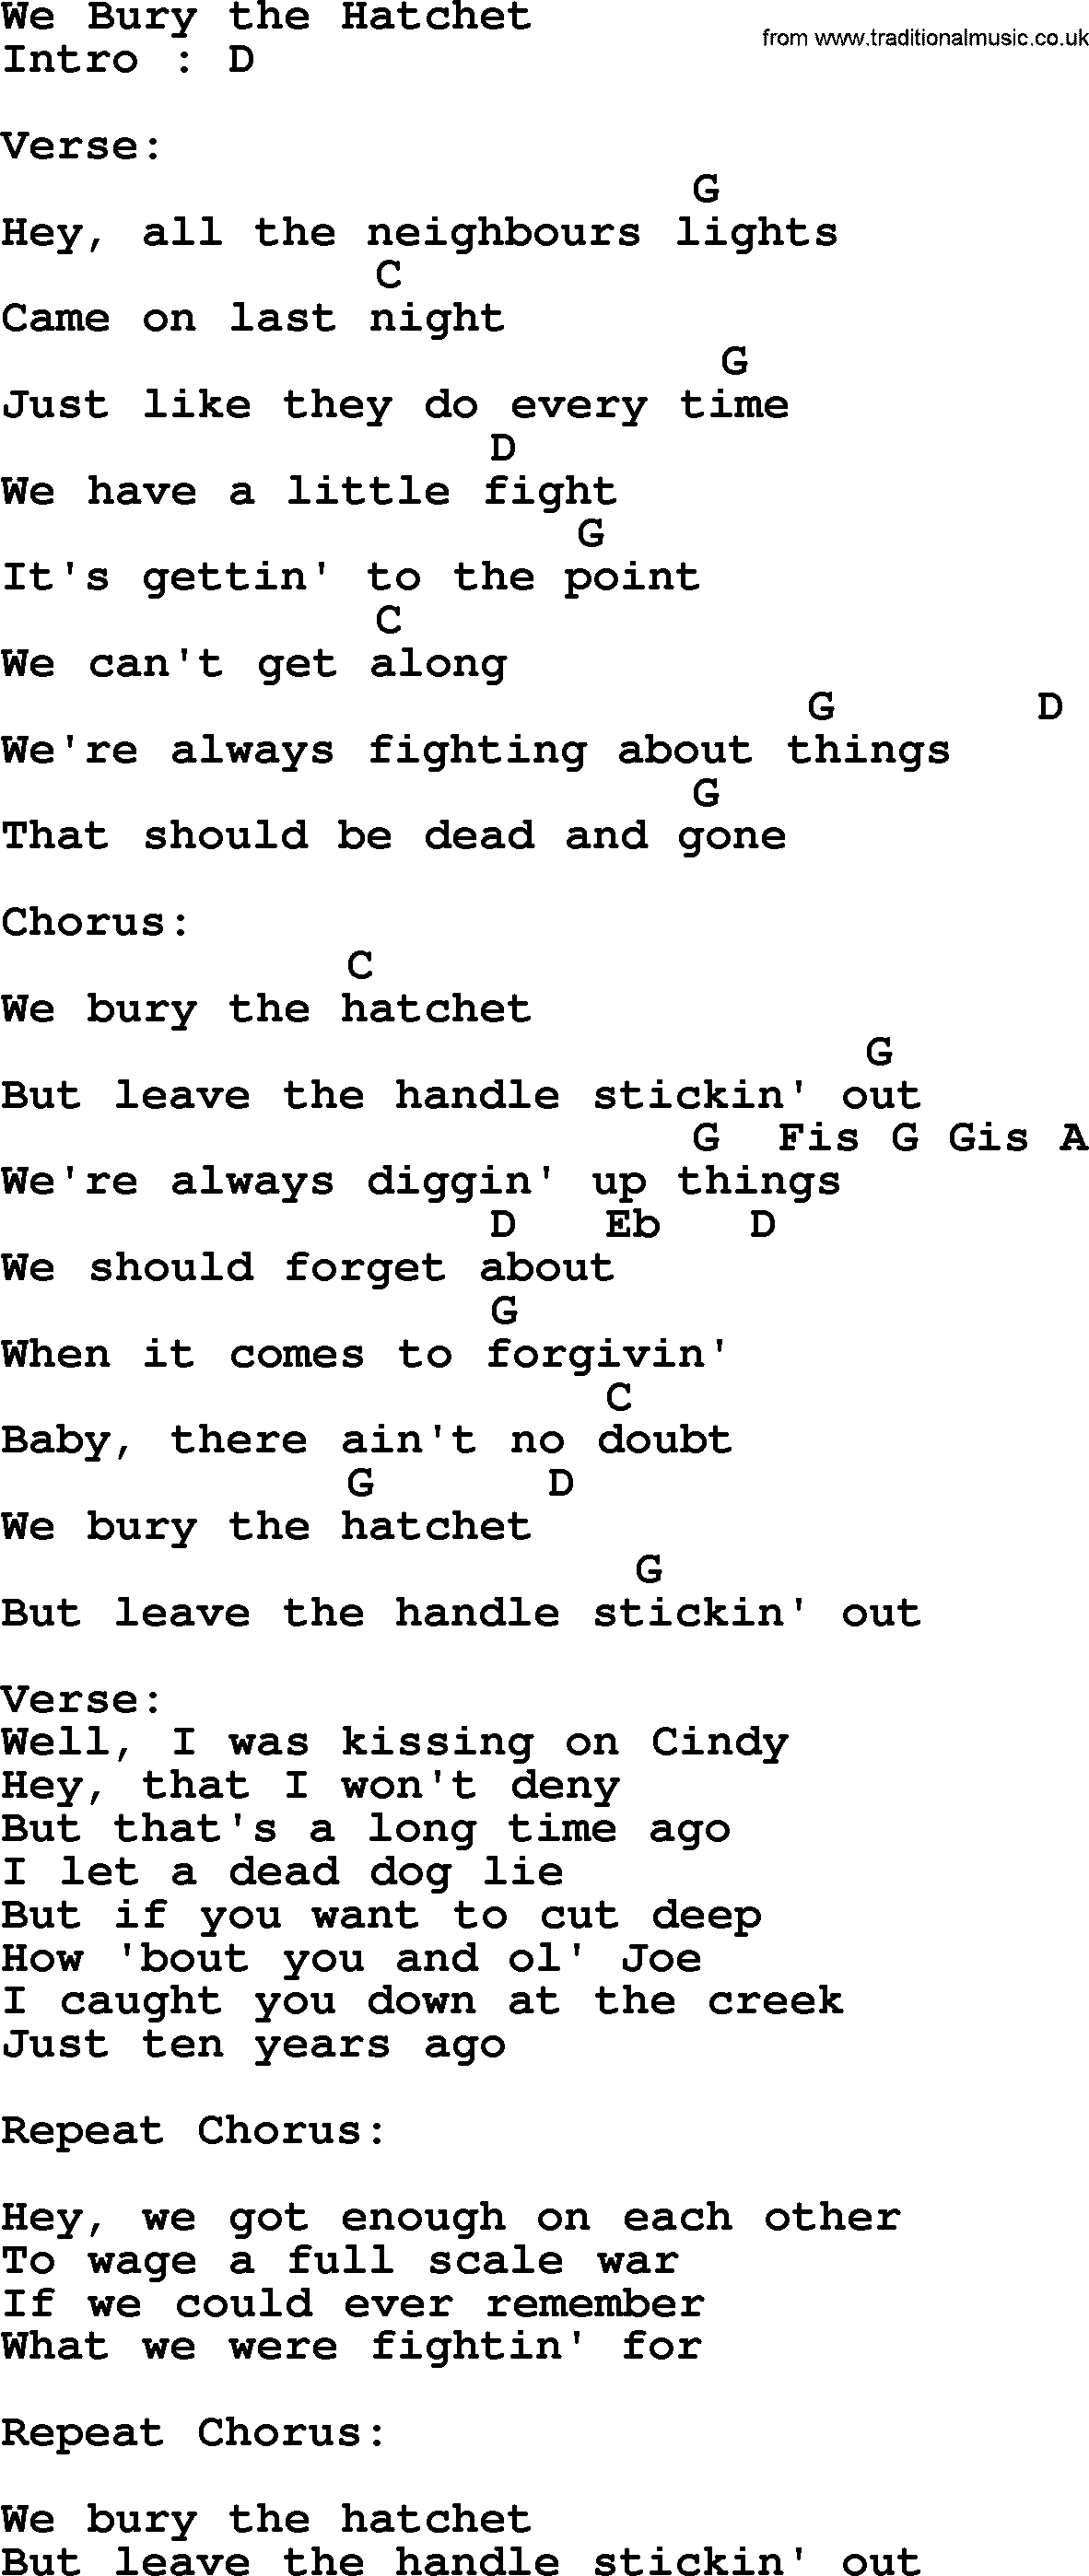 Garth Brooks song: We Bury The Hatchet, lyrics and chords